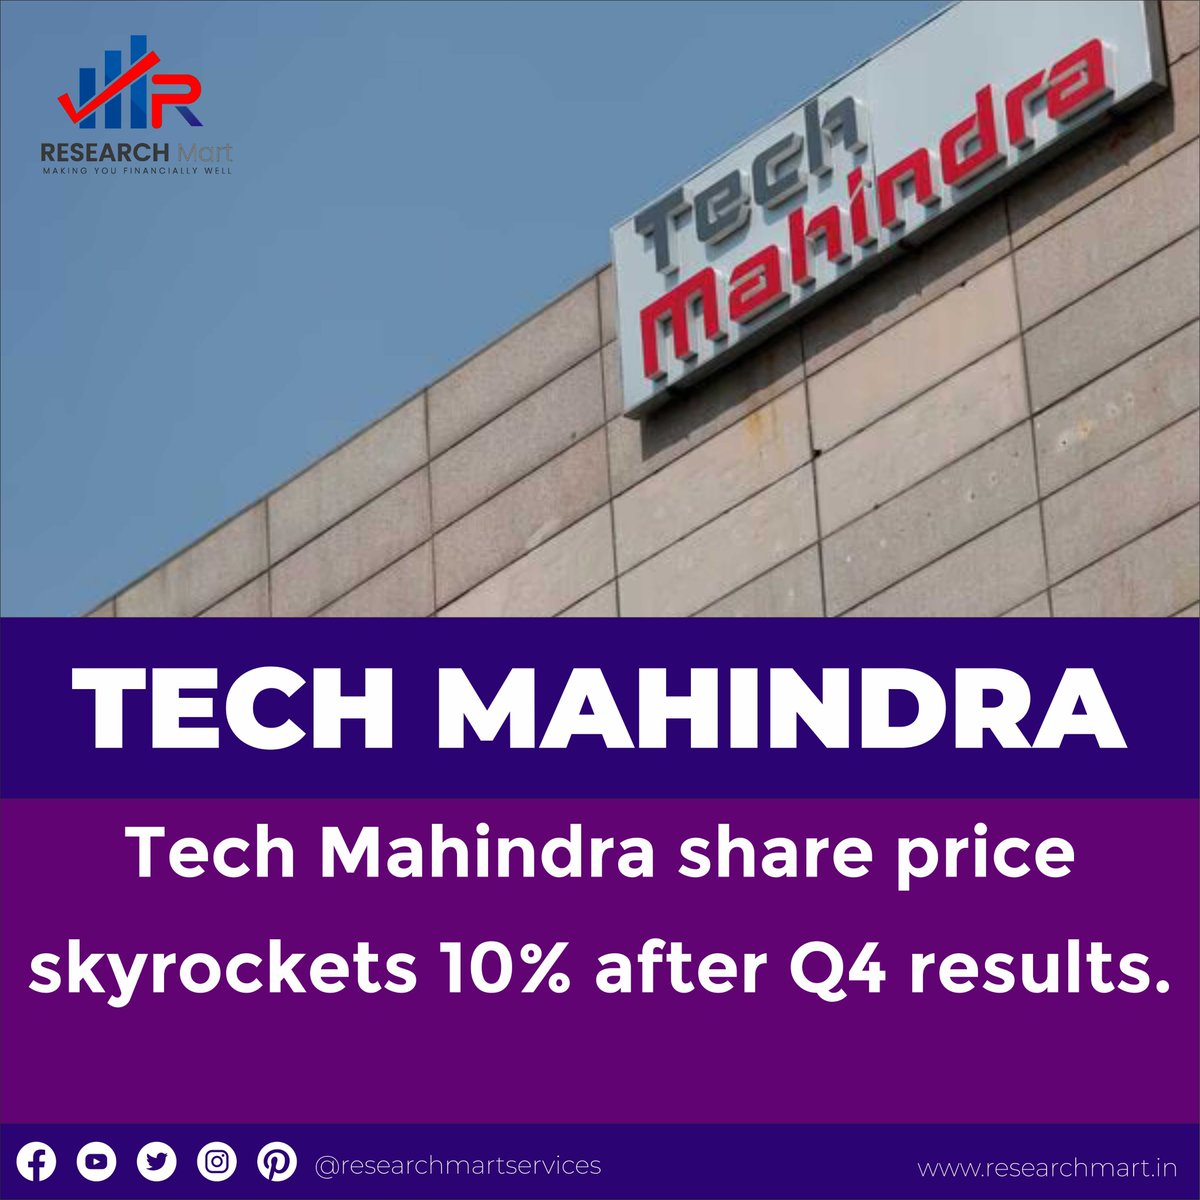 Tech Mahindra share price skyrockets 10% after Q4 results.
.
.
.
.
.
.
.
#TechMahindra